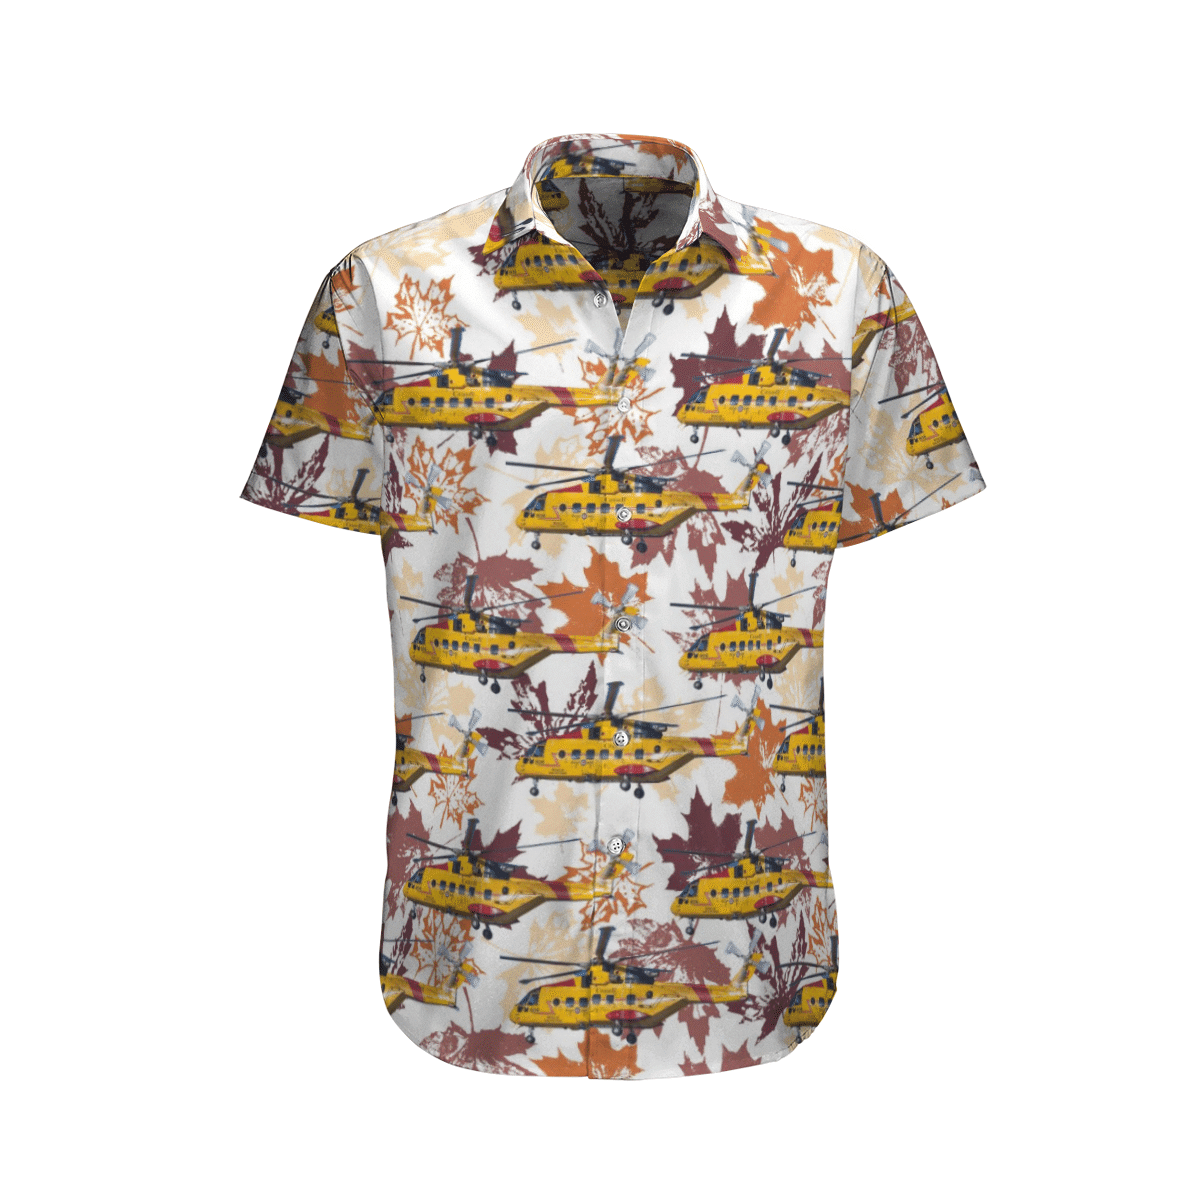 Get a new Hawaiian shirt to enjoy summer vacation 109